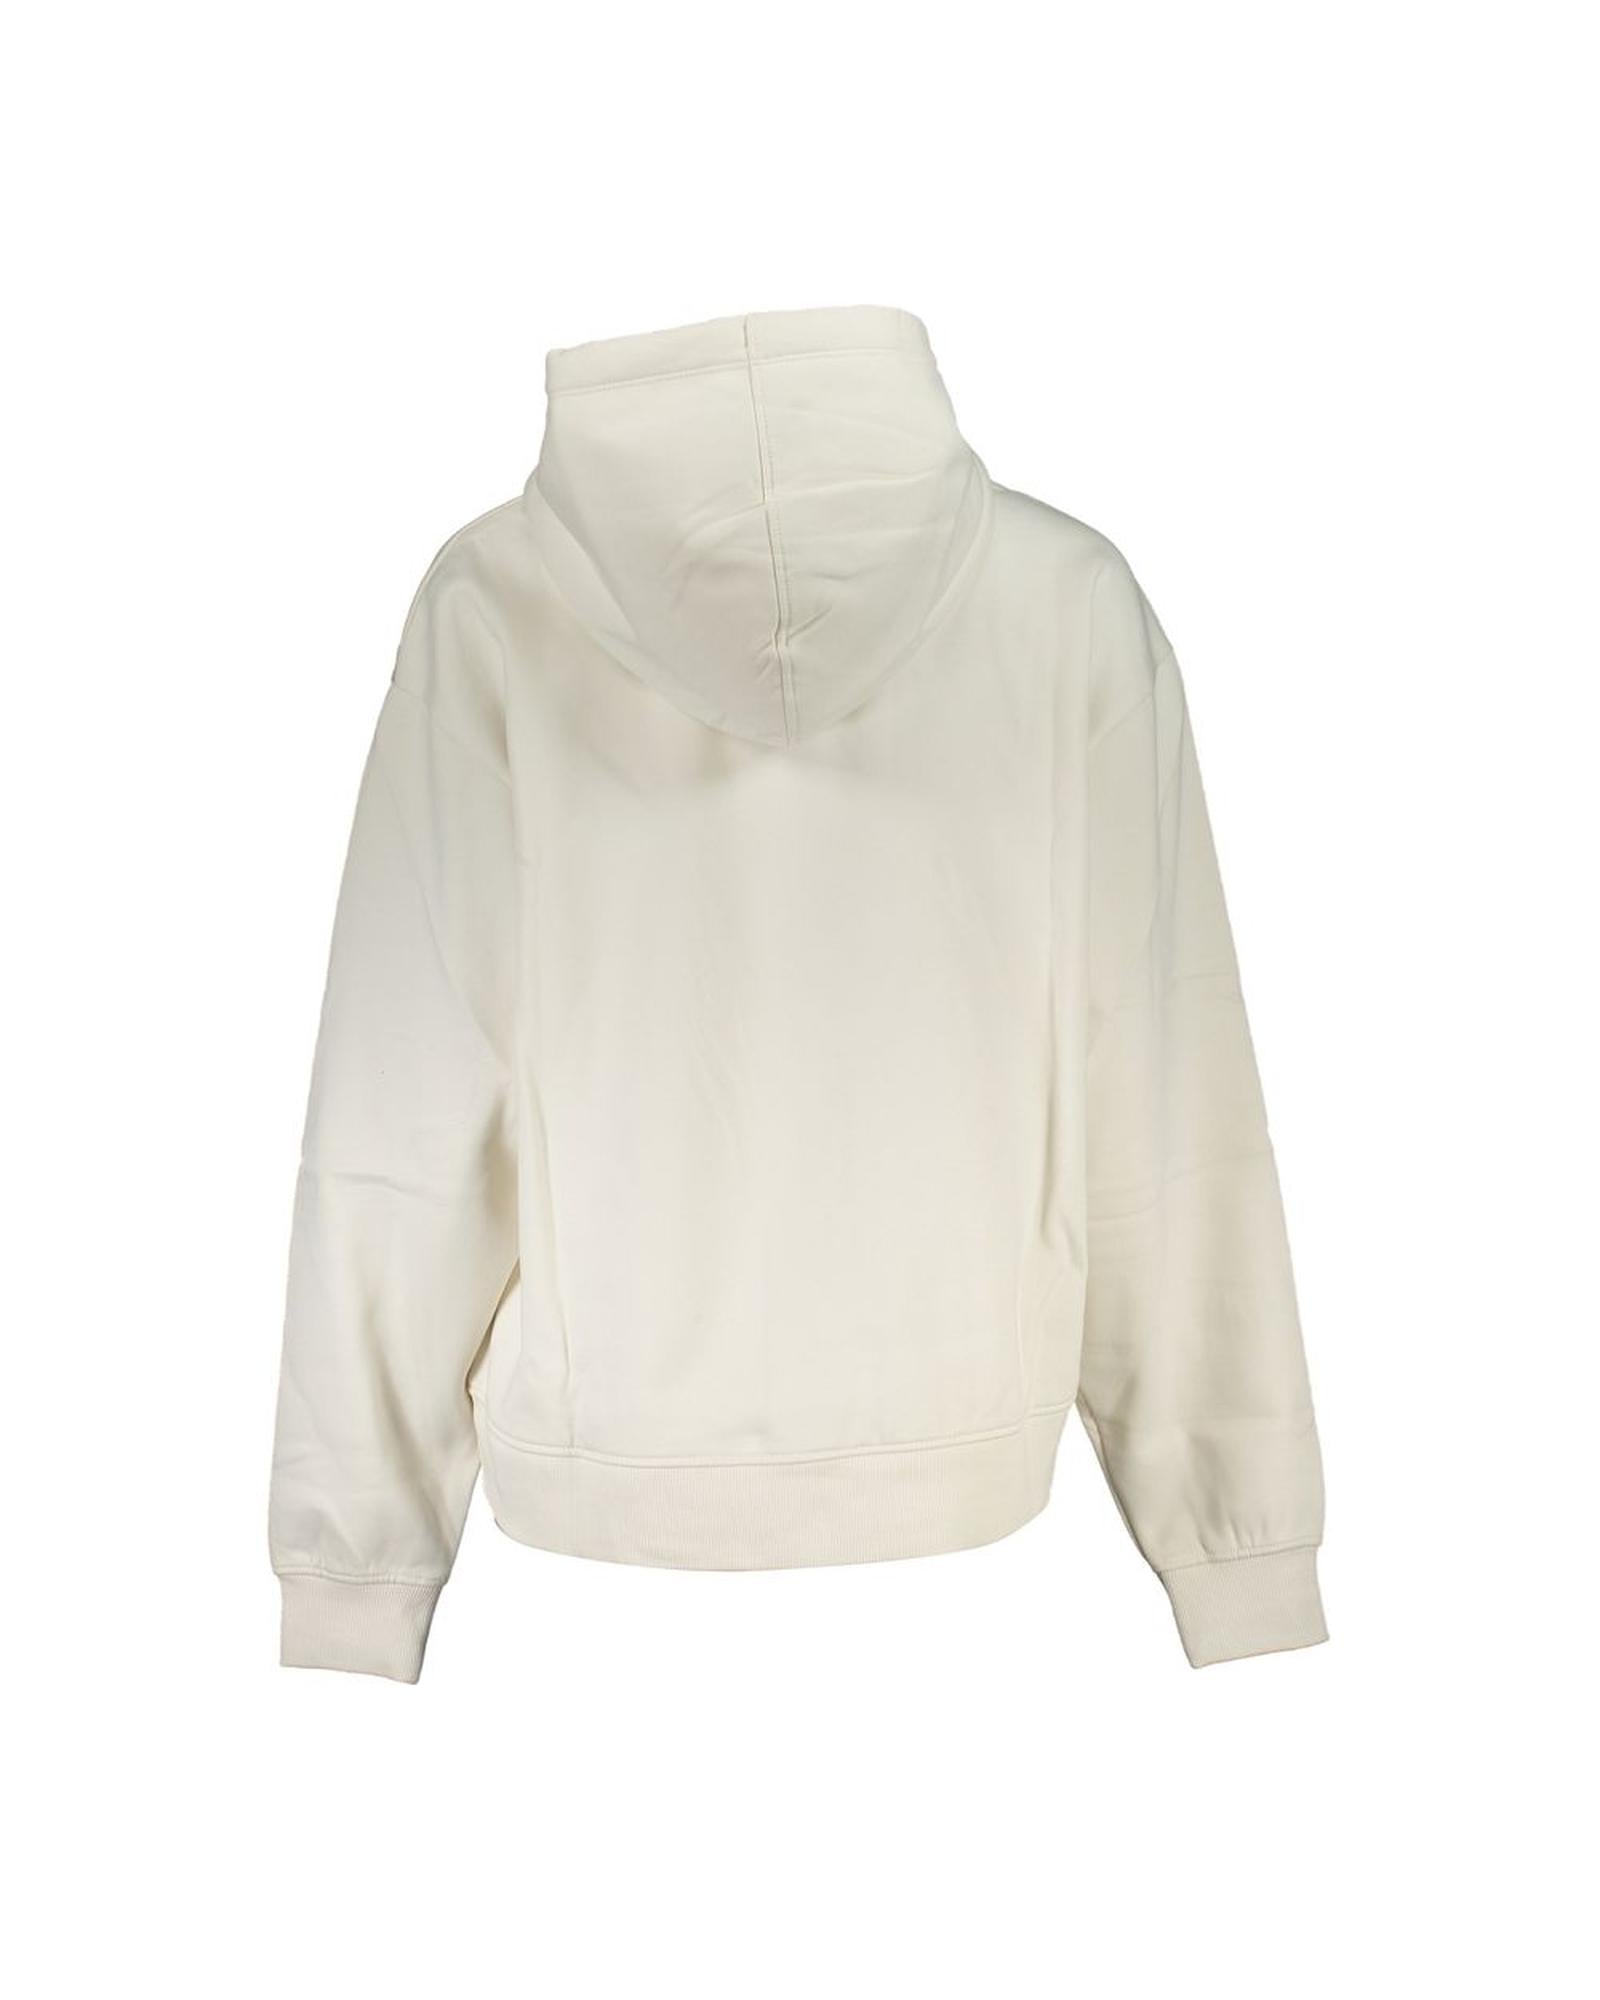 Women's White Cotton Sweater - XL